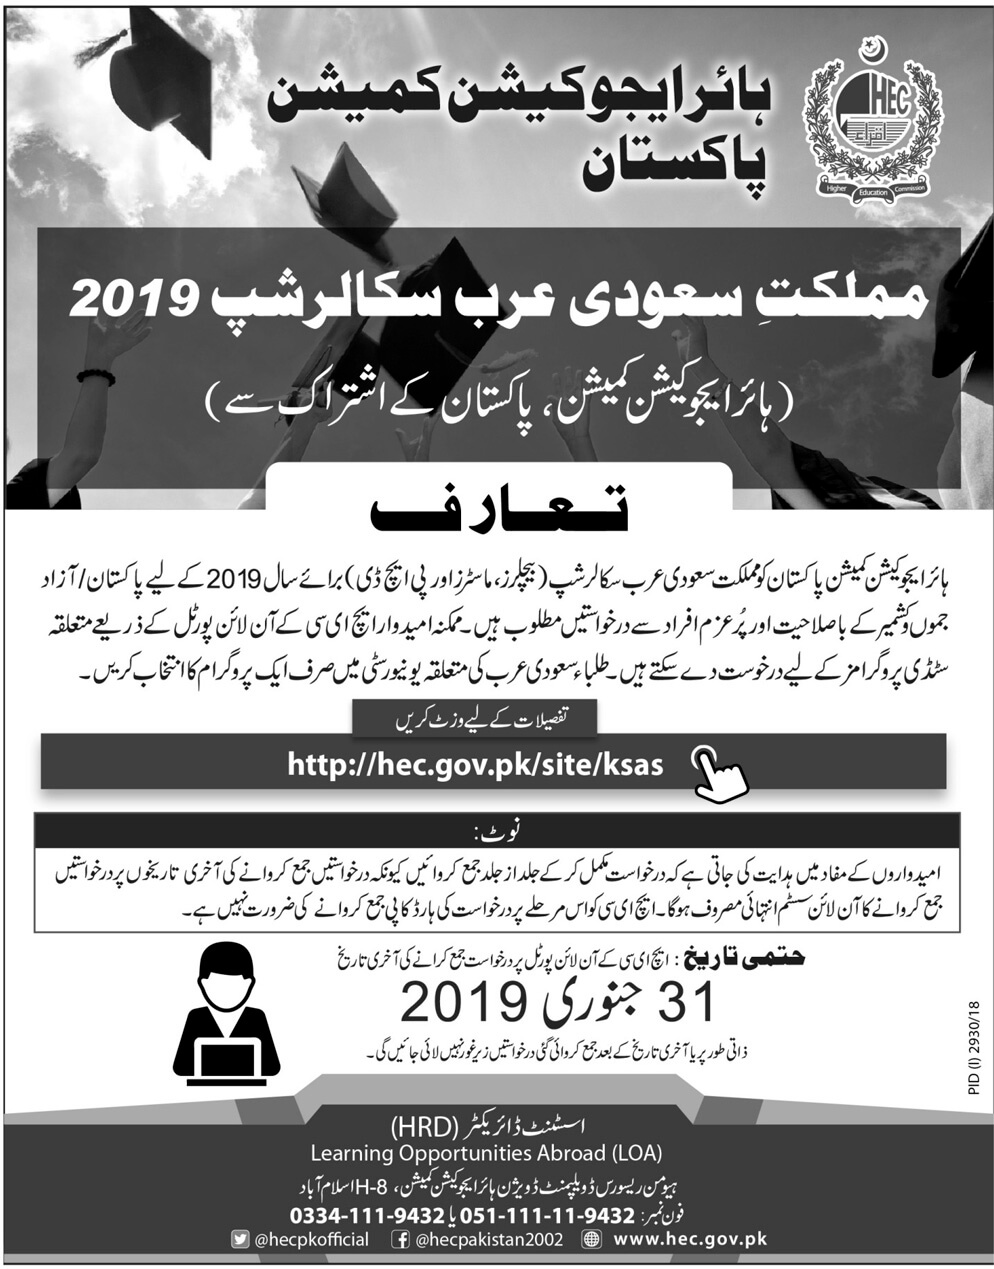 Kingdom of south Arabia scholarship for Pakistani students 2019 Through HEC-thumbnail